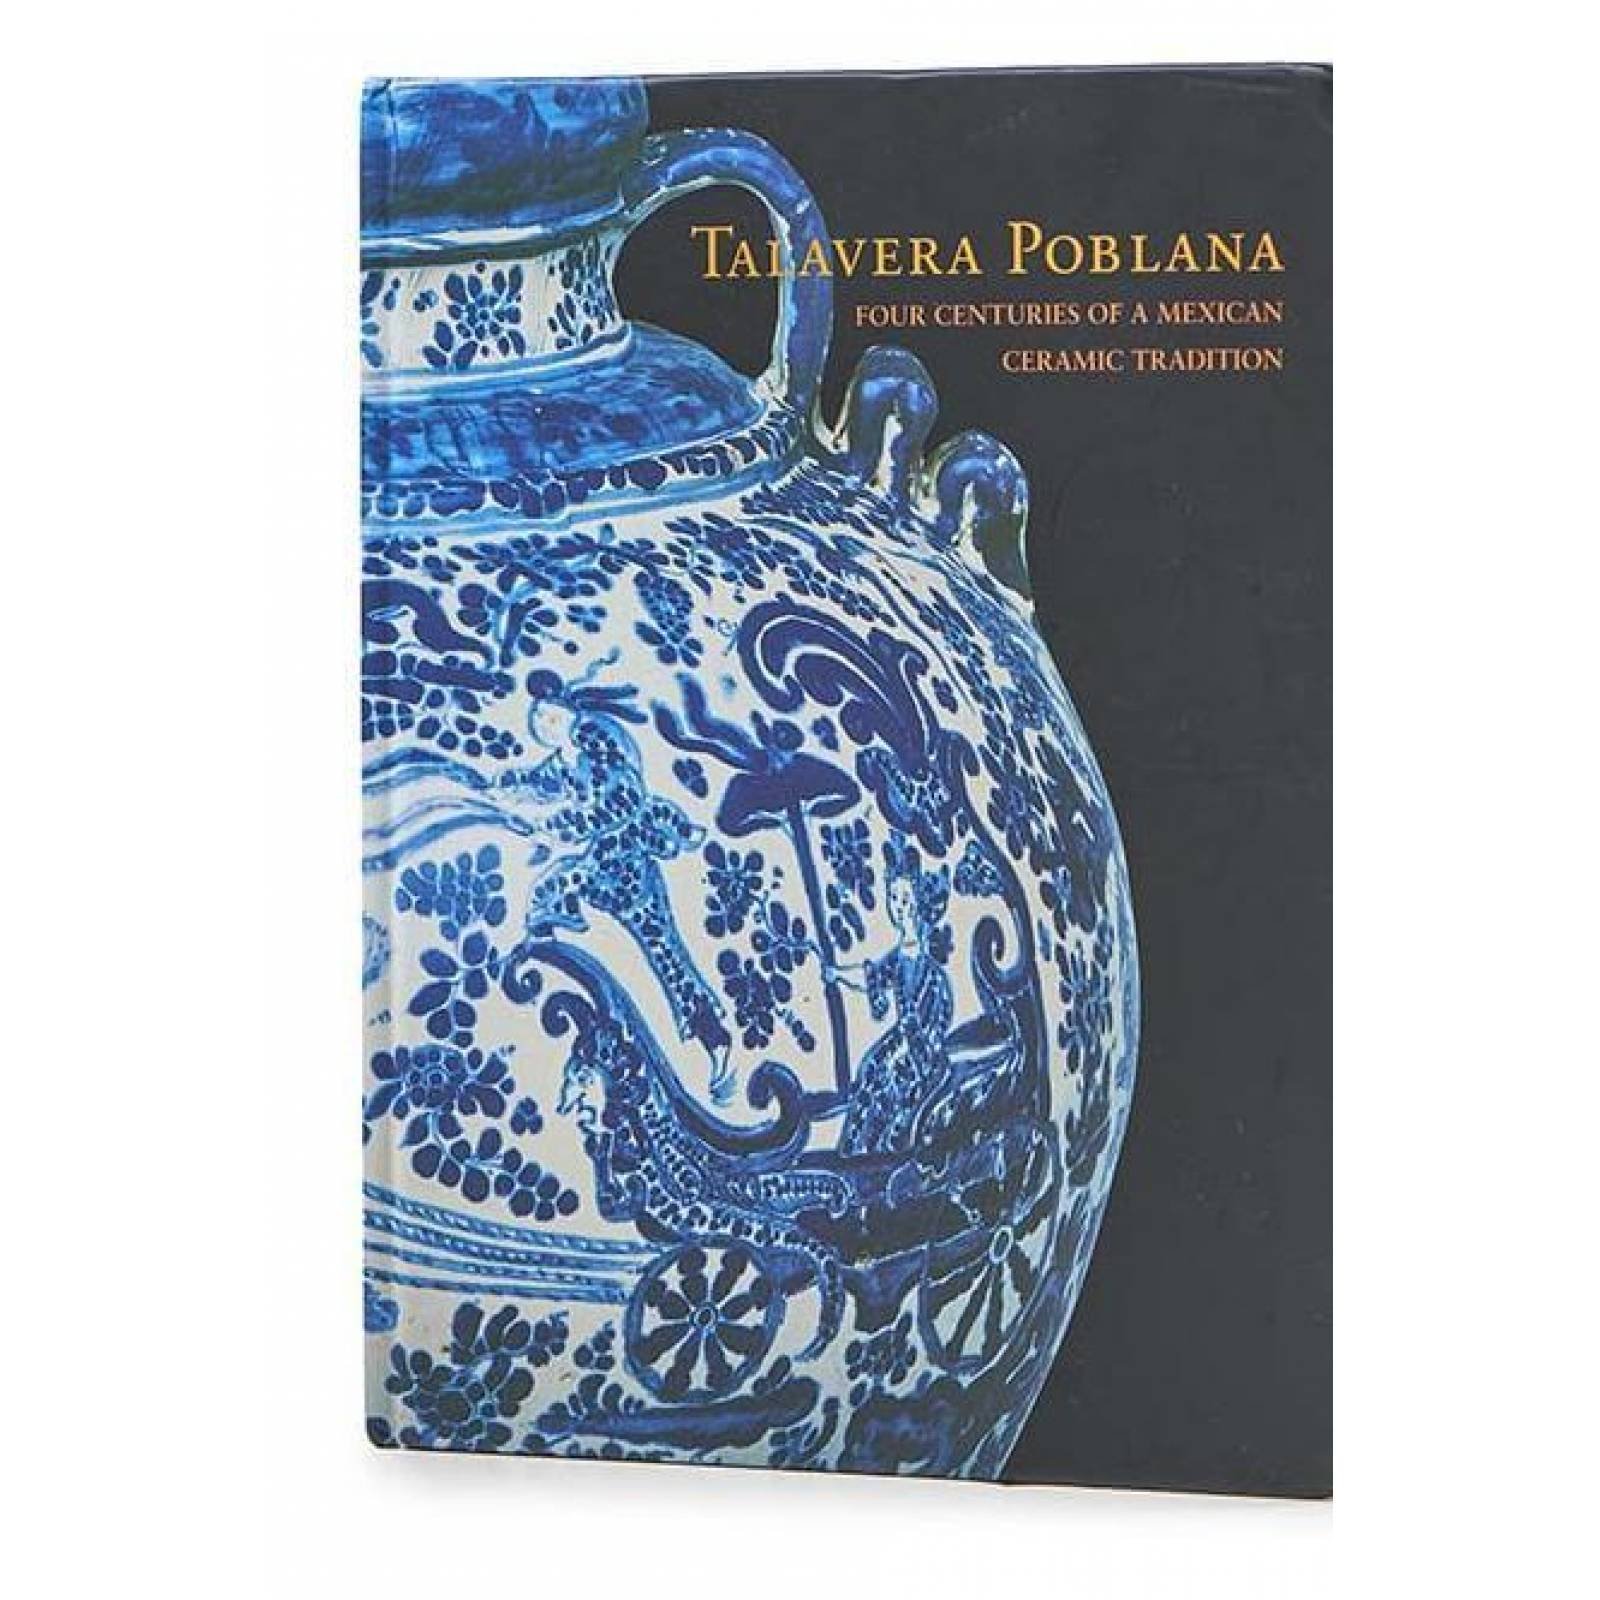 Talavera poblana: four centuries of a mexican ceramic tradition